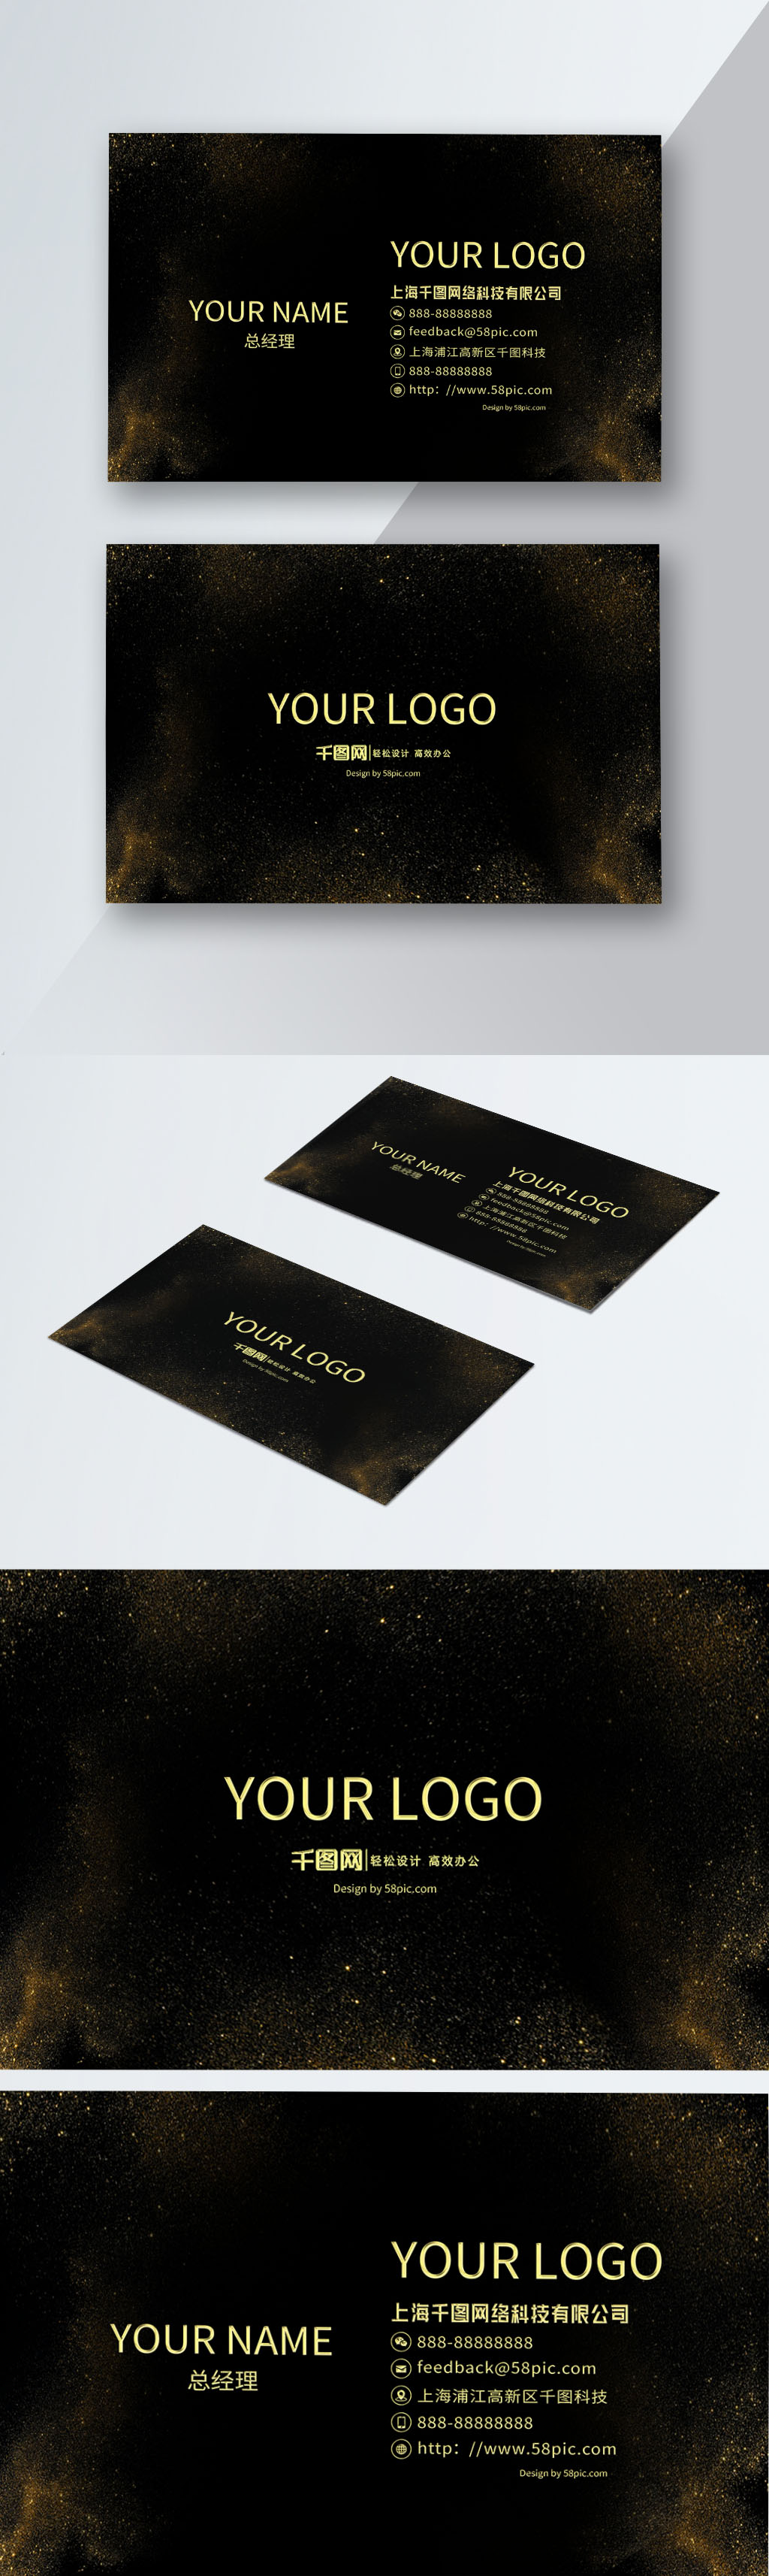 Download Black Gold Flower Business Card Design Template Image Picture Free Download 728895041 Lovepik Com PSD Mockup Templates